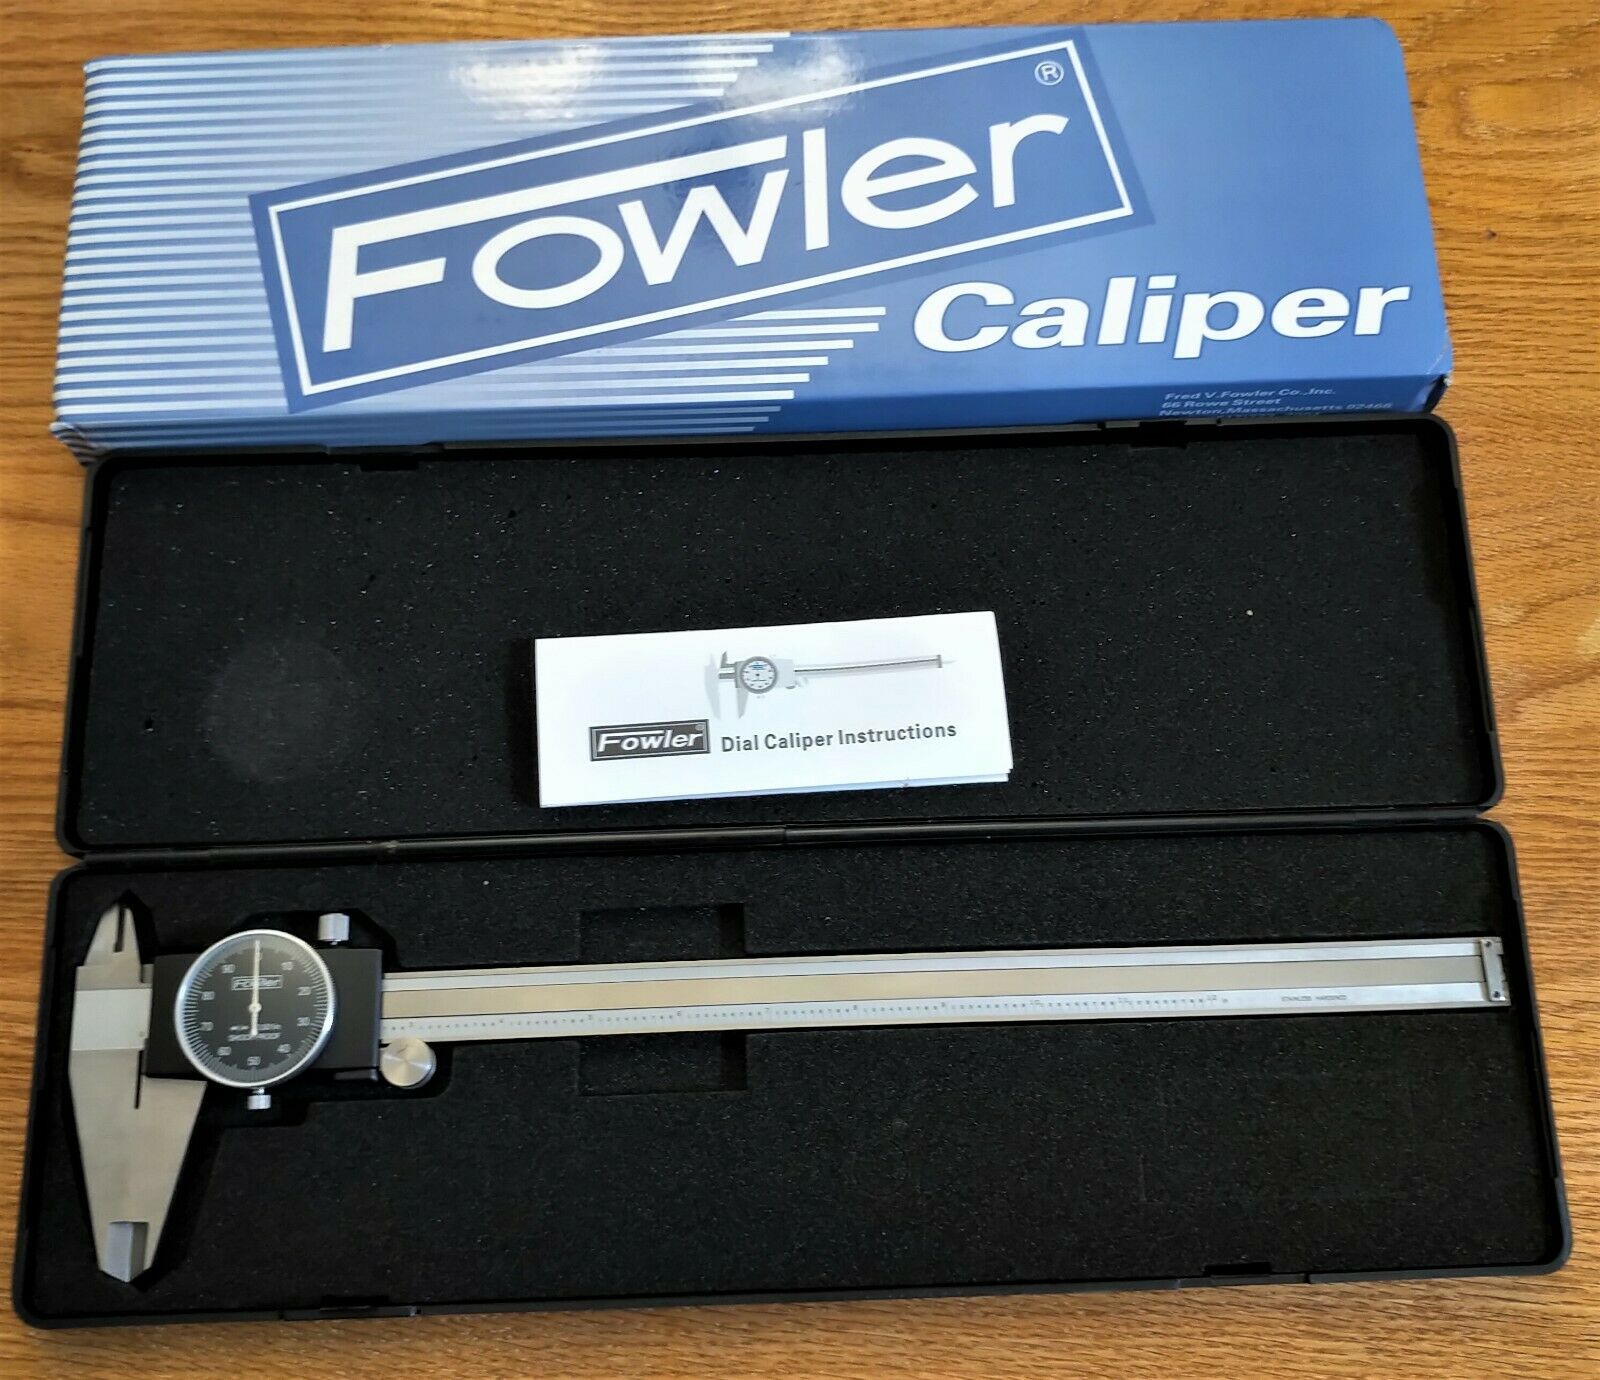 Fowler, 0-12” One-Rev Dial Caliper, 52-008-013-0